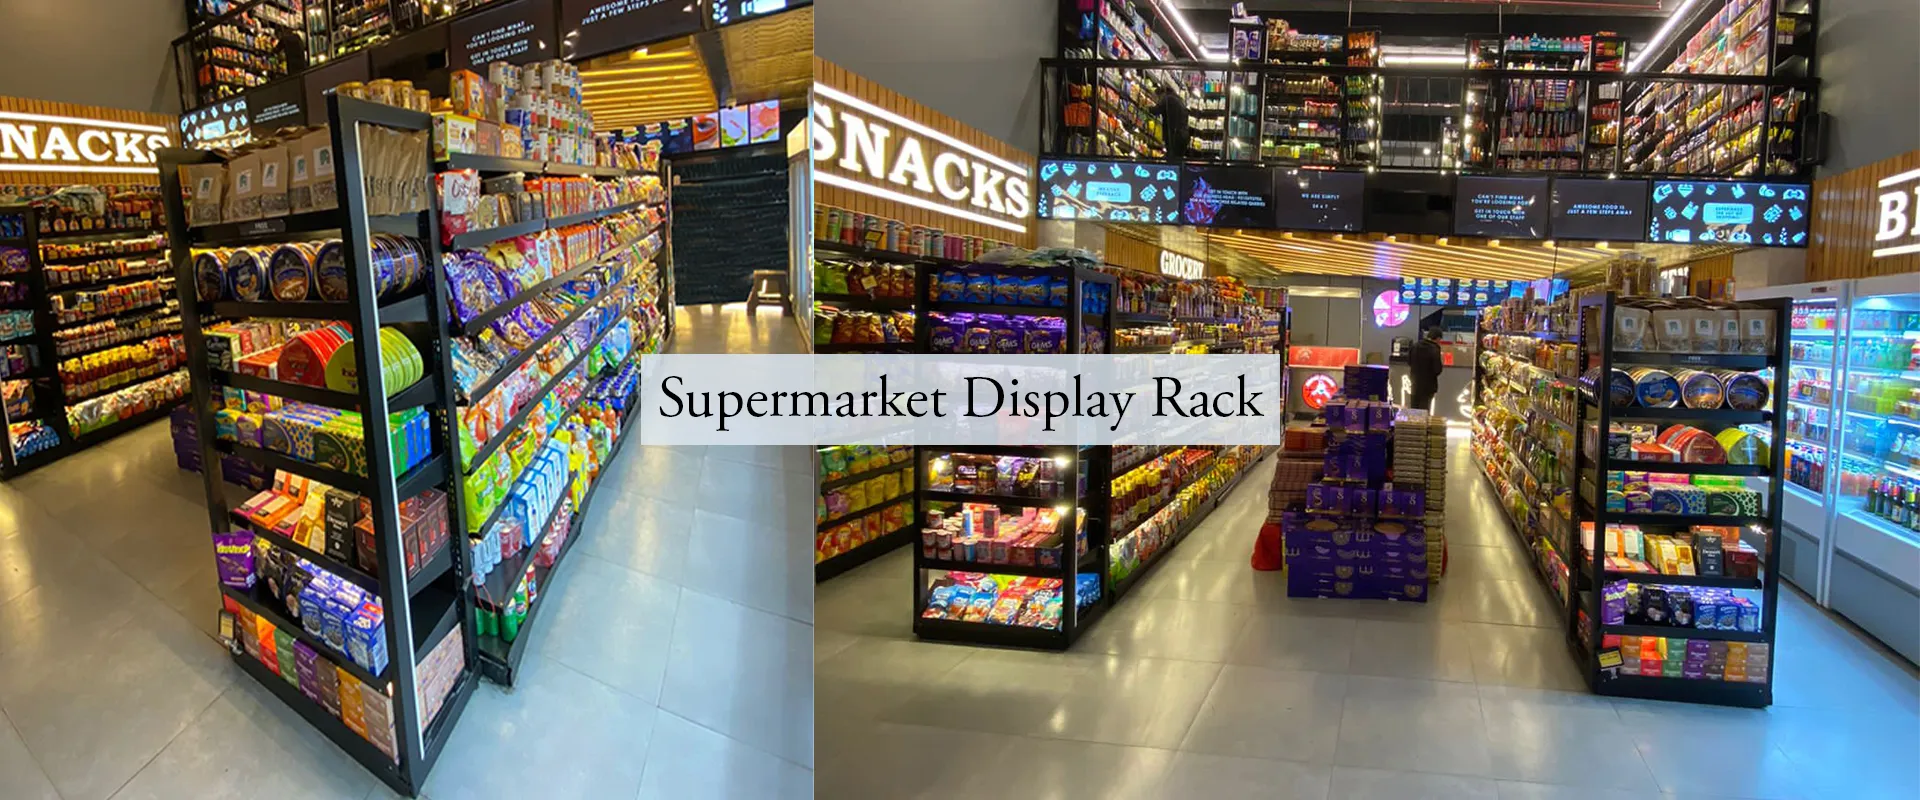 Supermarket Display Rack In Sathupalli